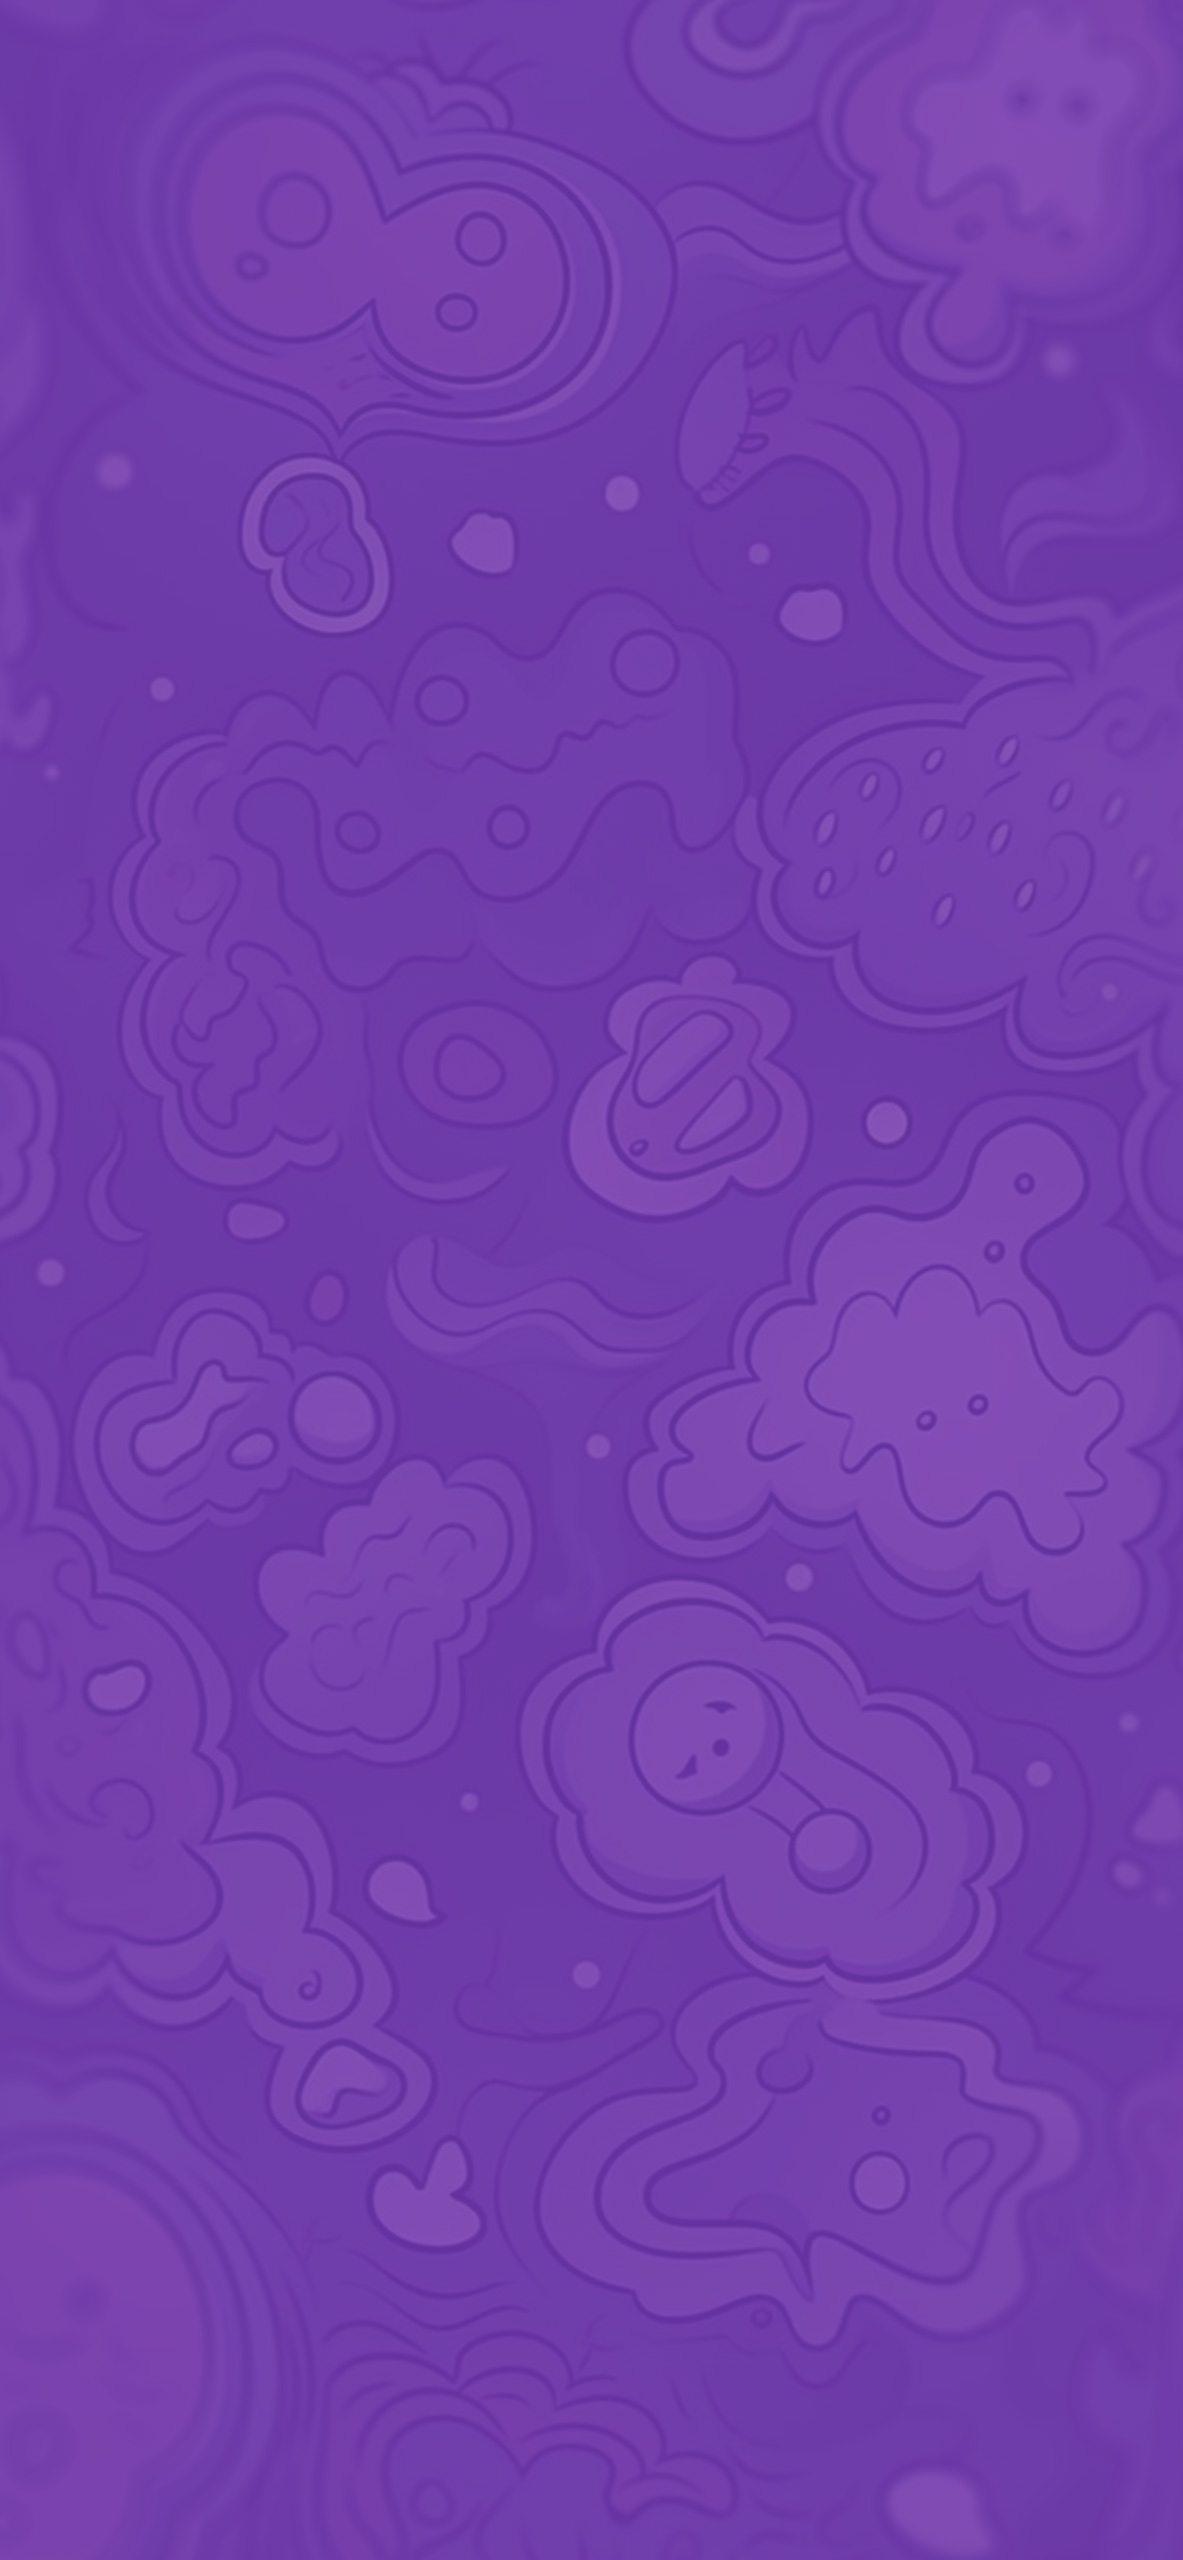 doodle purple background